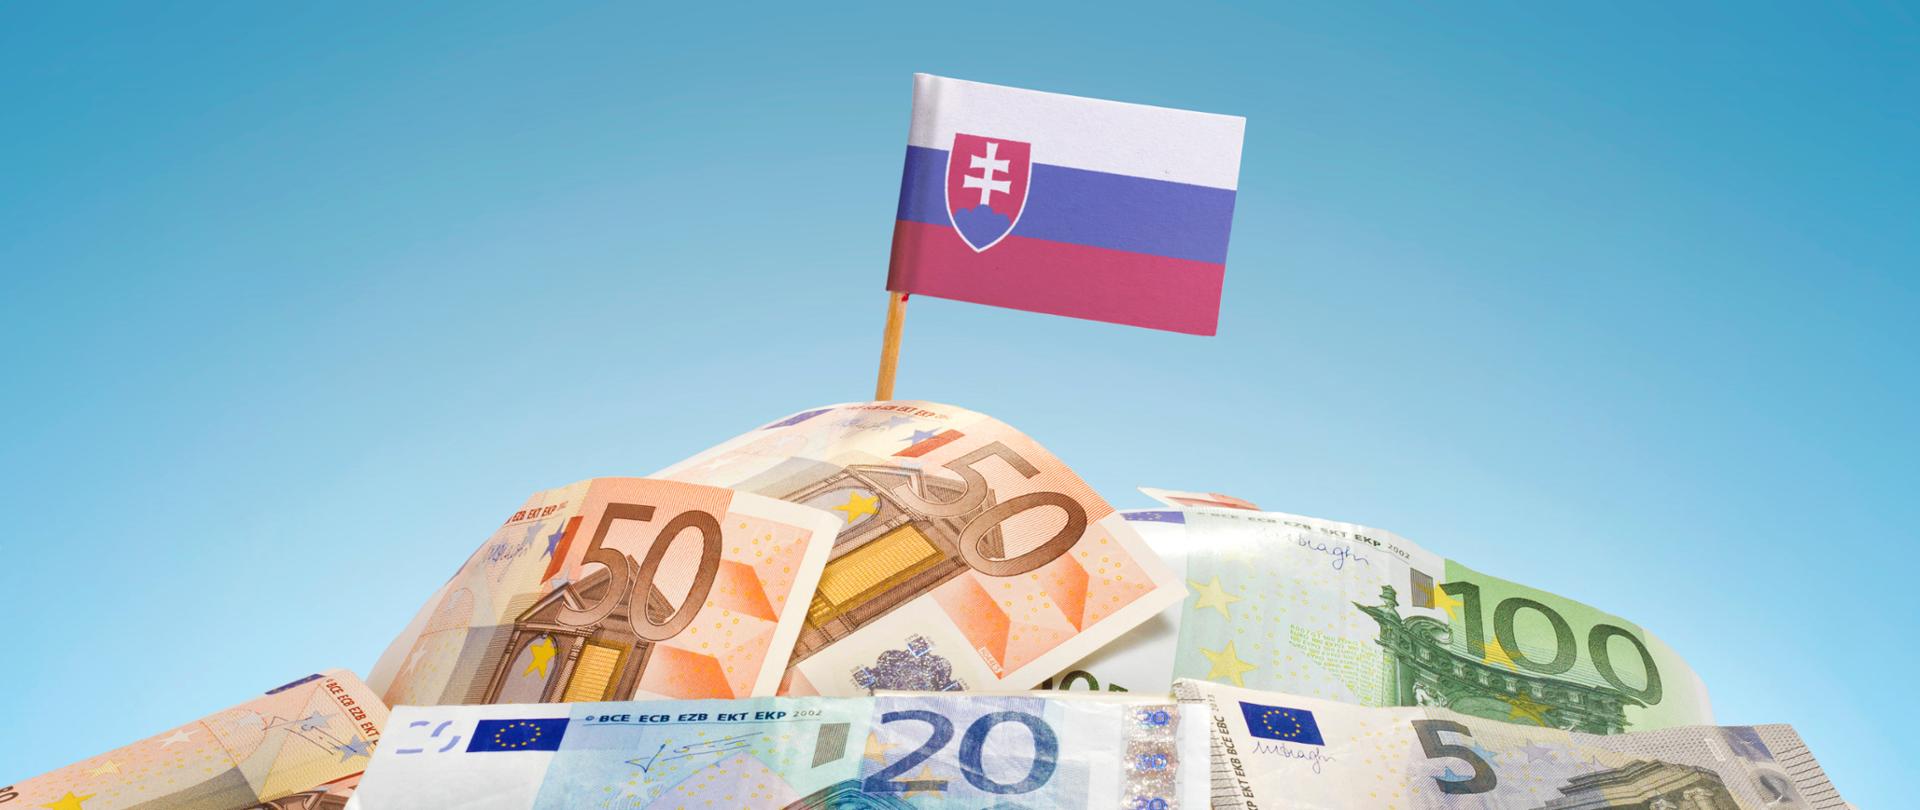 Banknoty Euro i flaga Slowacji